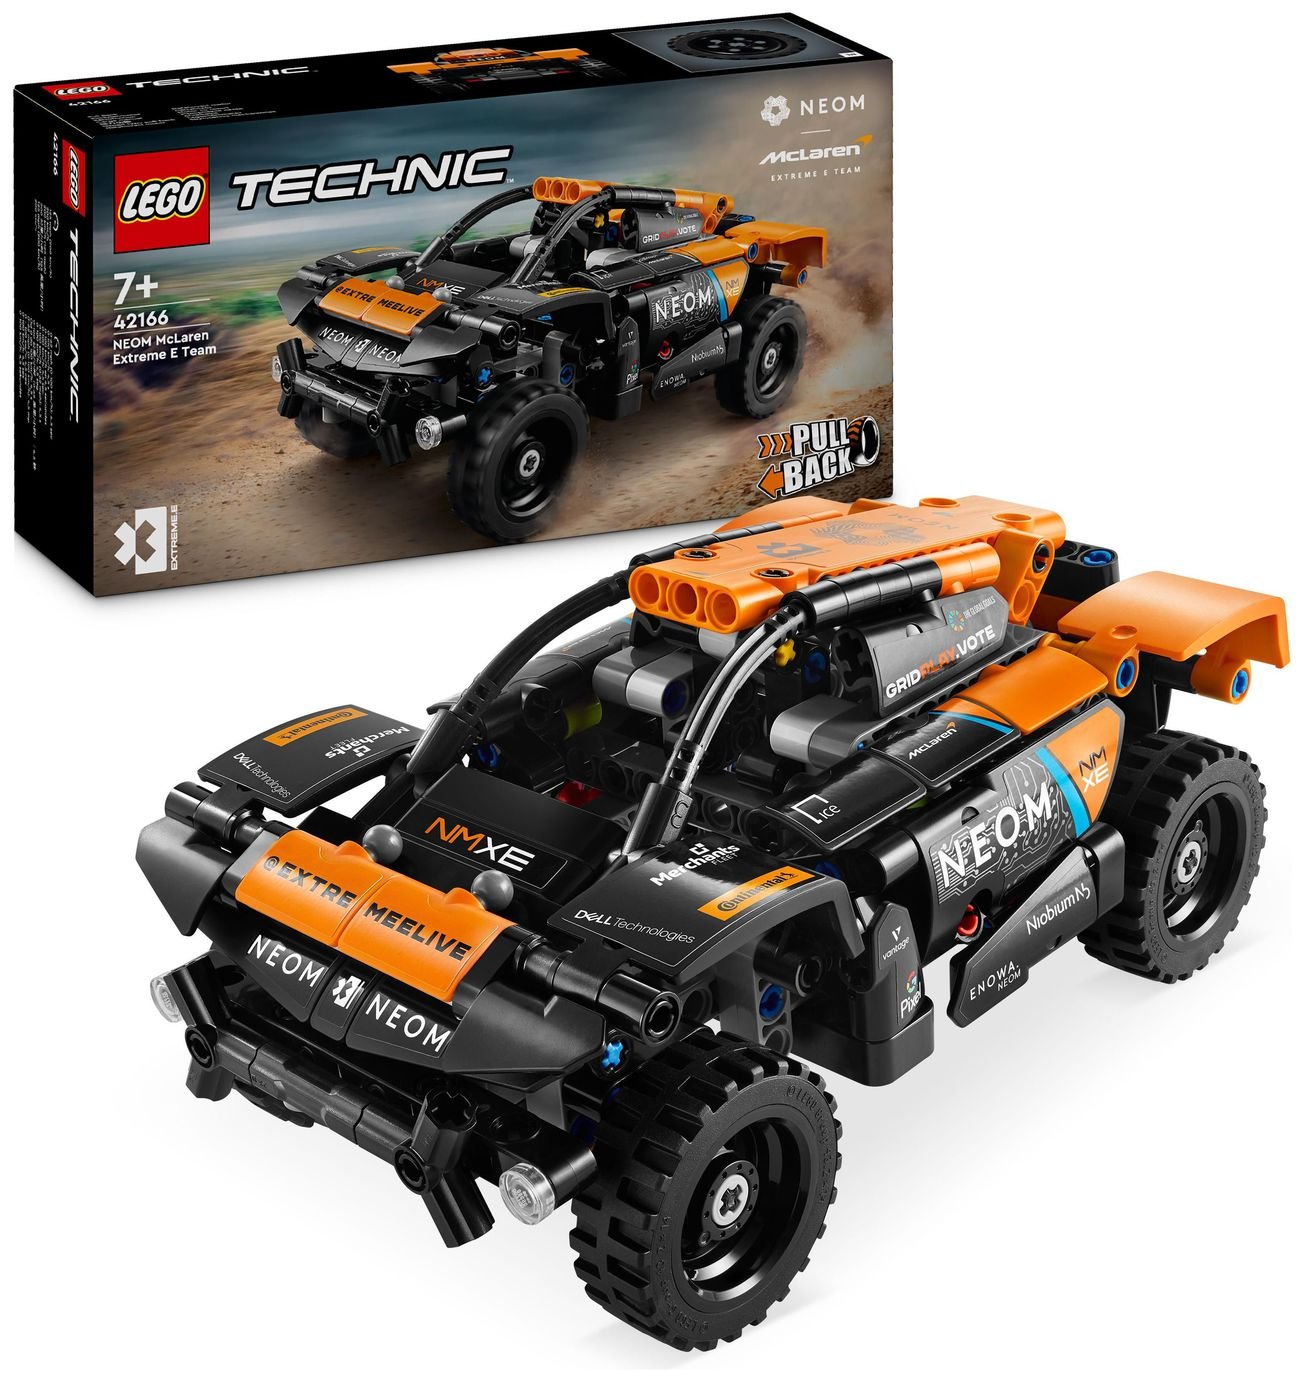 LEGO Technic NEOM McLaren Extreme E Race Car Toy 42166